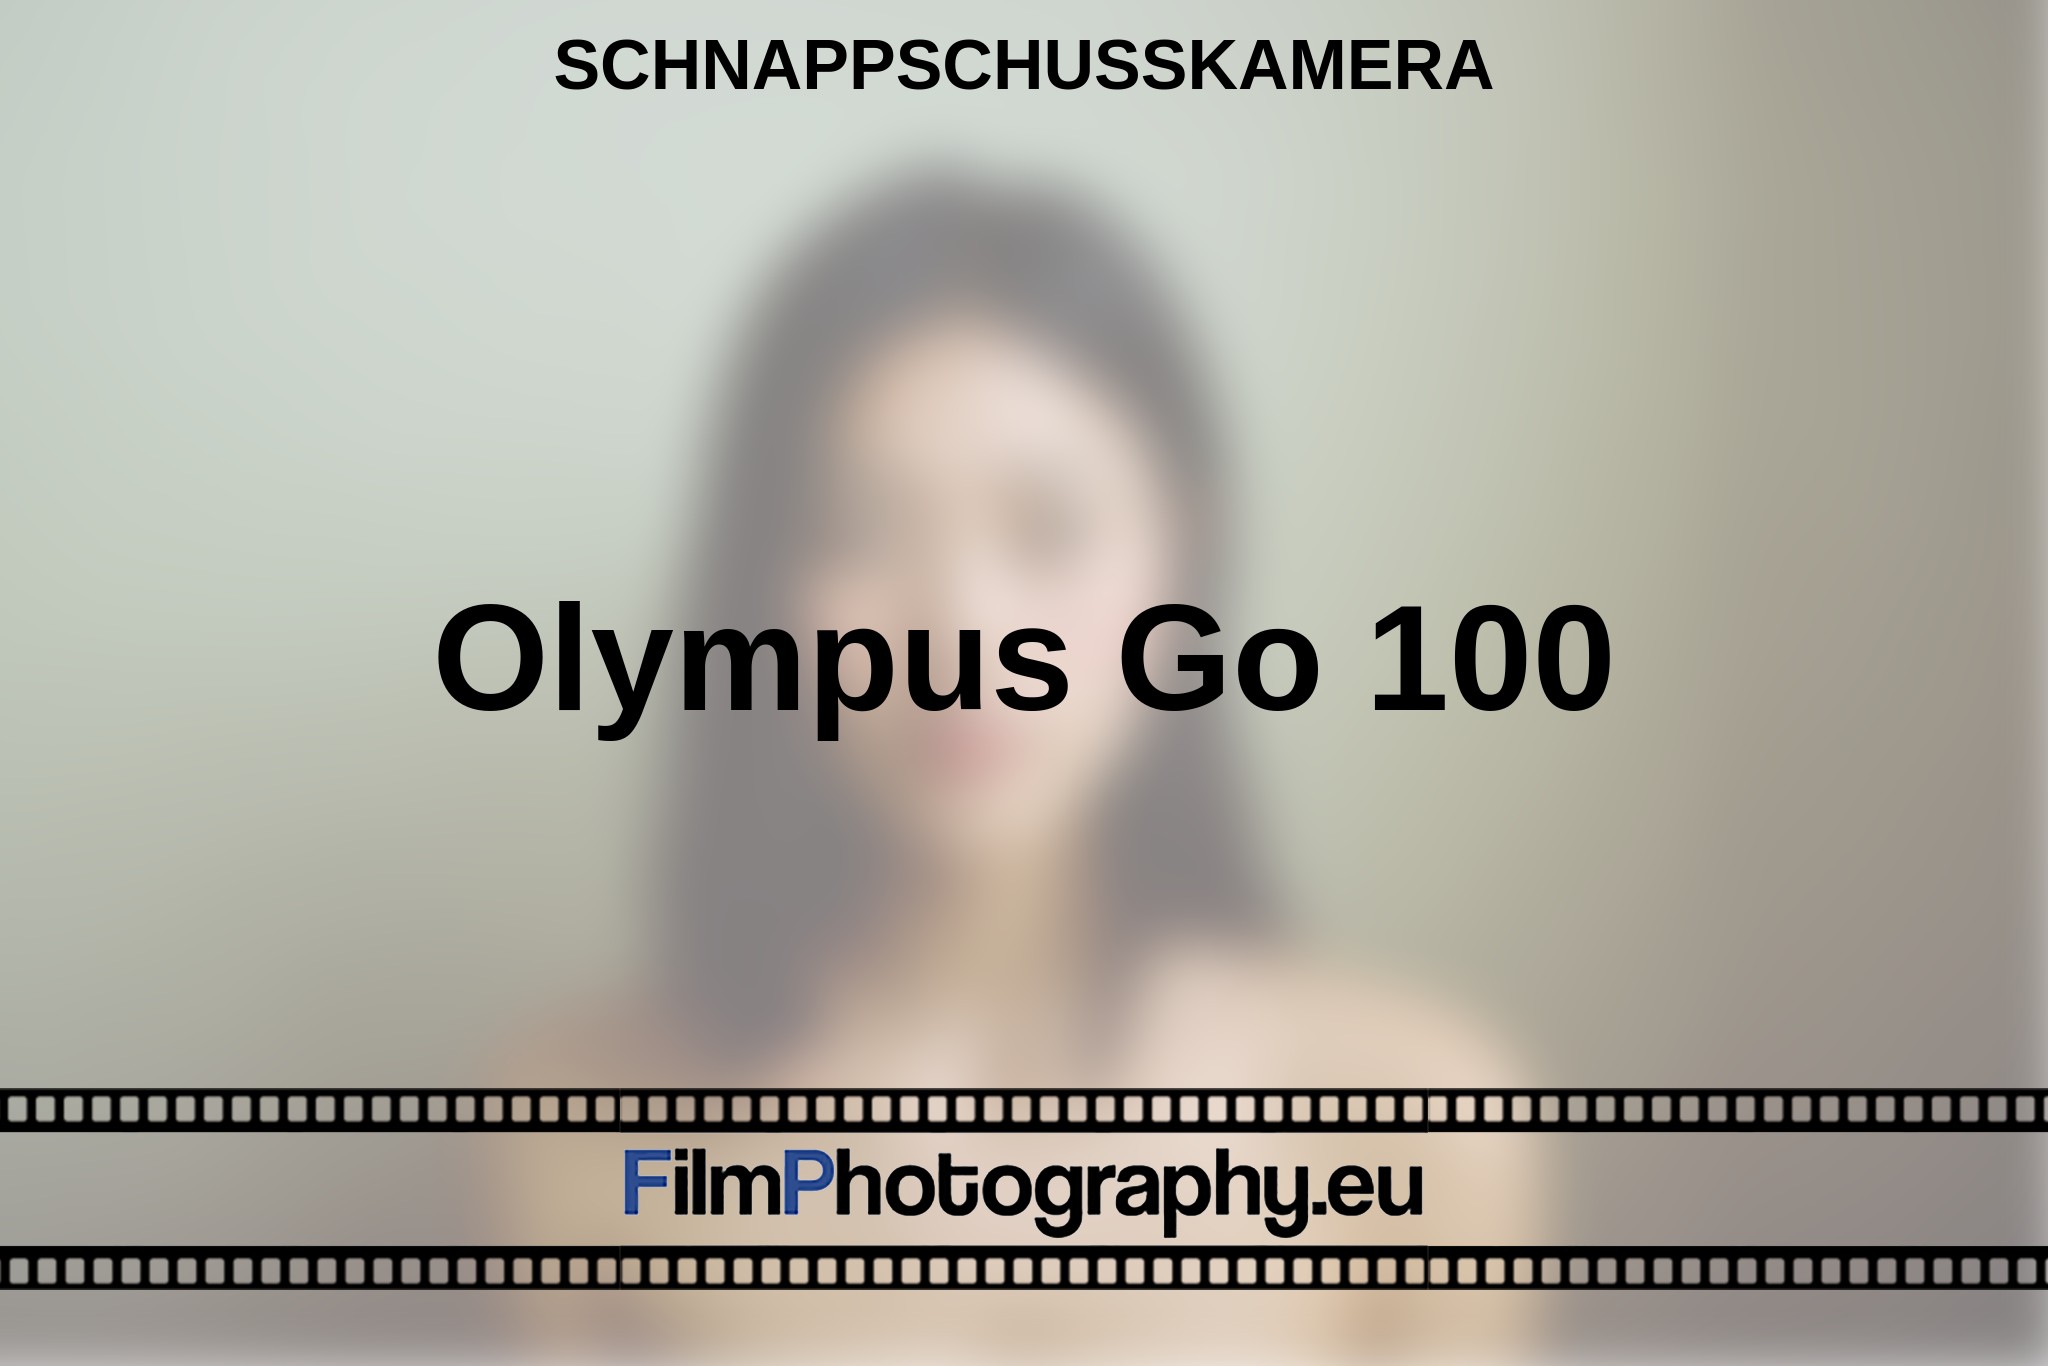 olympus-go-100-schnappschusskamera-bnv.jpg